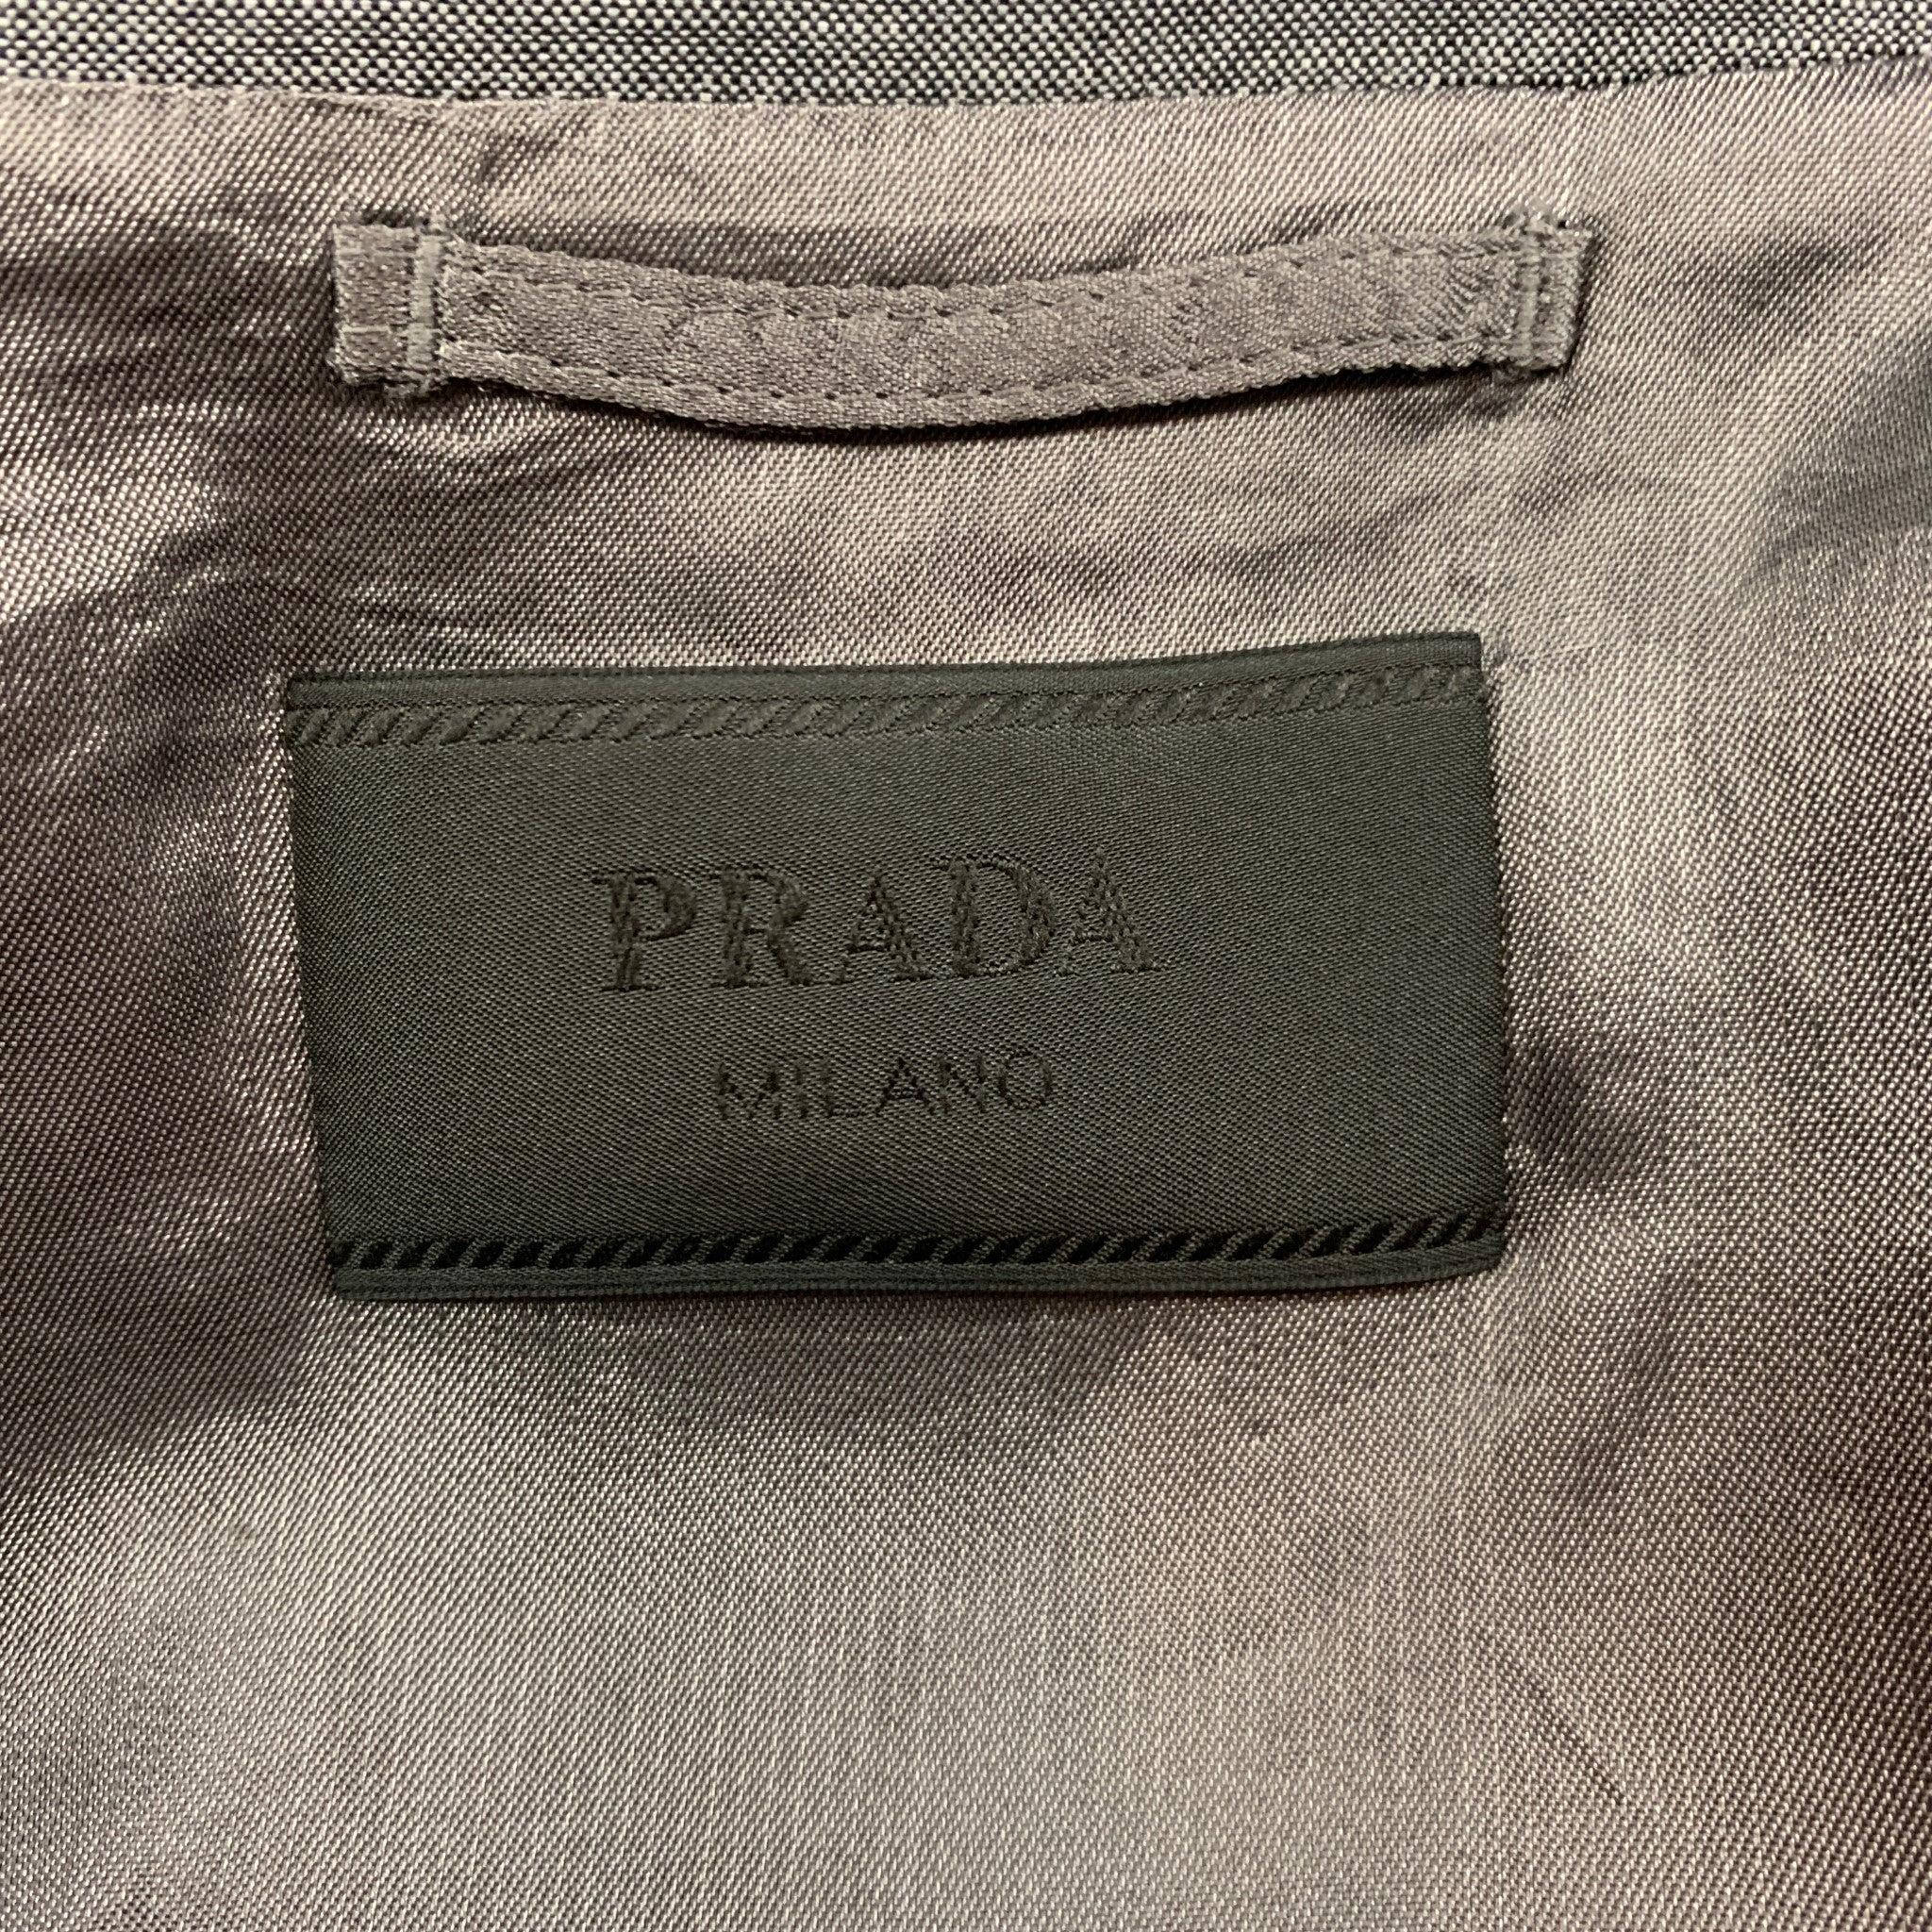 PRADA Size 36 Dark Gray Contrast Stitch Mohair / Wool Jacket For Sale 2